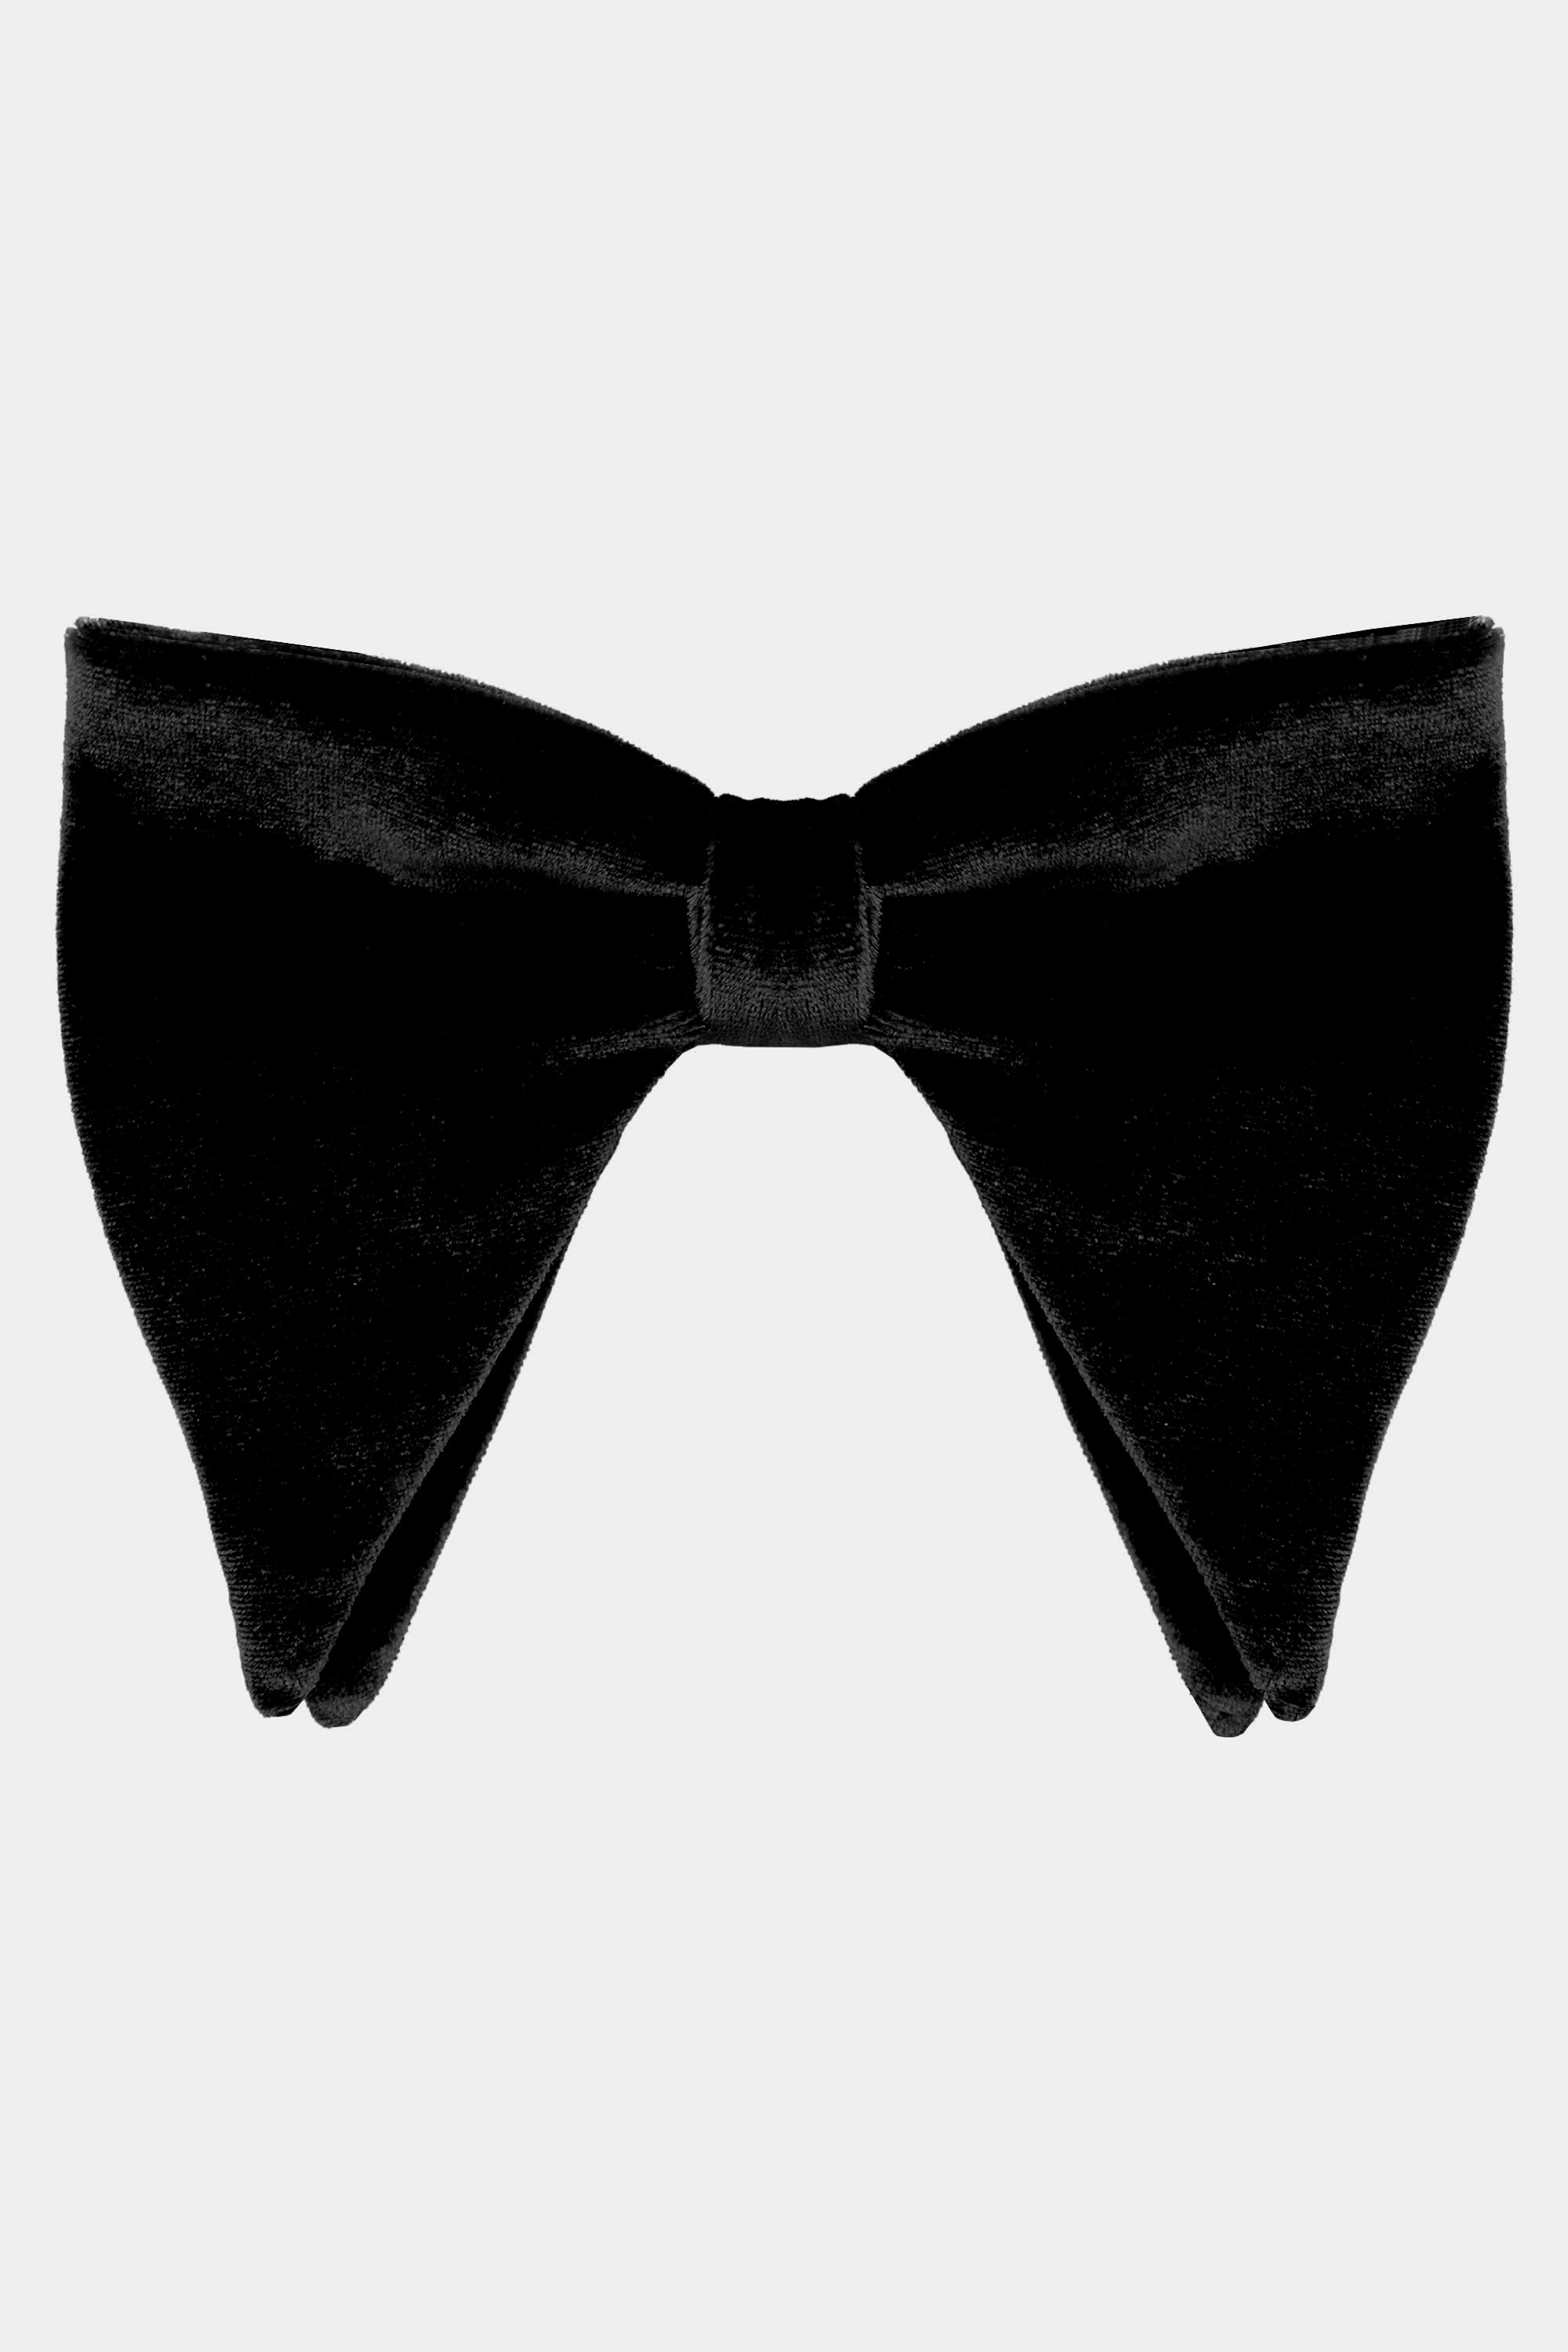 Mens-Oversized-Black-Bow-Tie-Tuxedo-Wedding-Groom-Butterfly-BowTie-from-Gentlemansguru.com